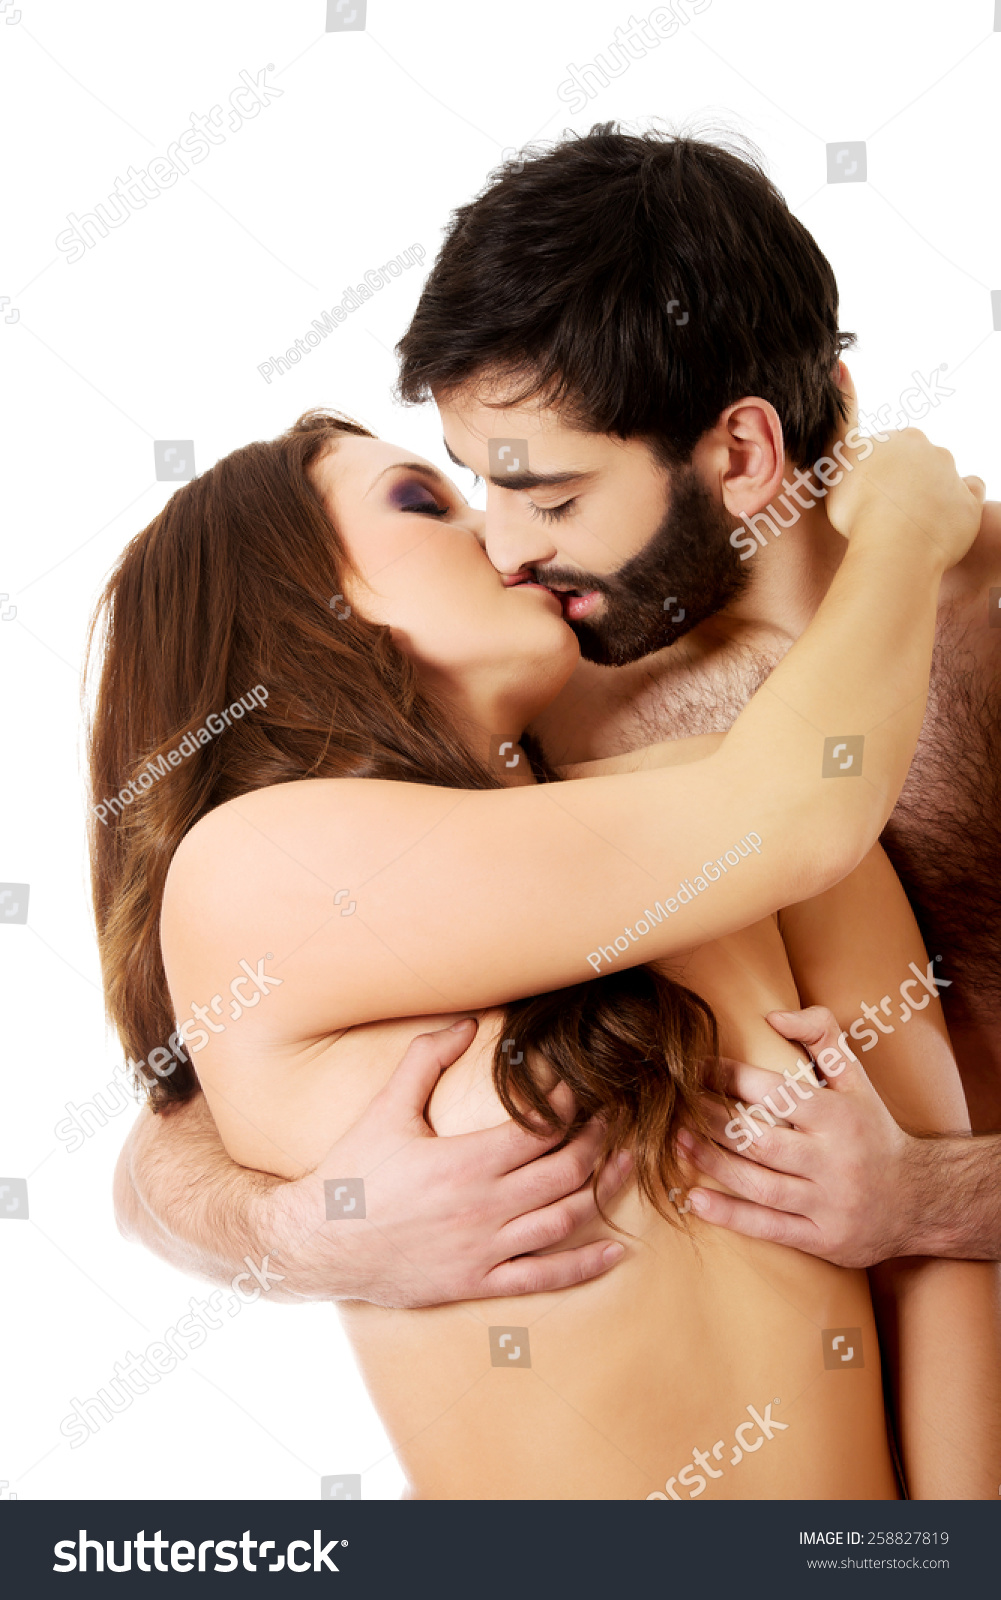 chris hyndman add photo how to kiss her boobs